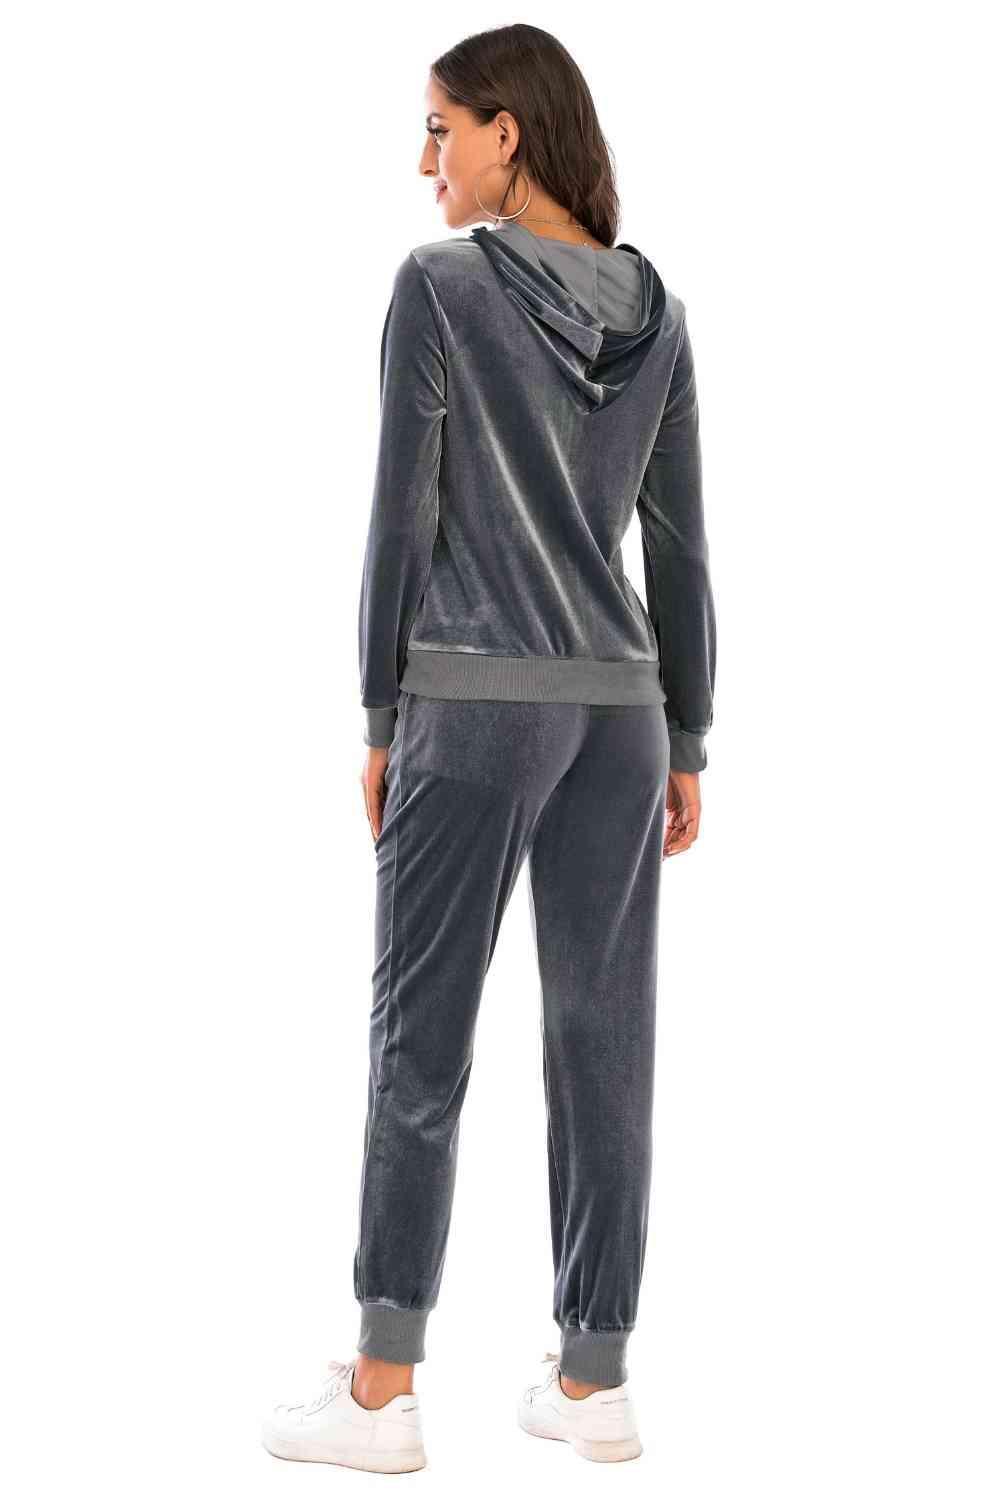 Active Lifestyle Zip-Up Hooded Jacket and Pants Set - MXSTUDIO.COM